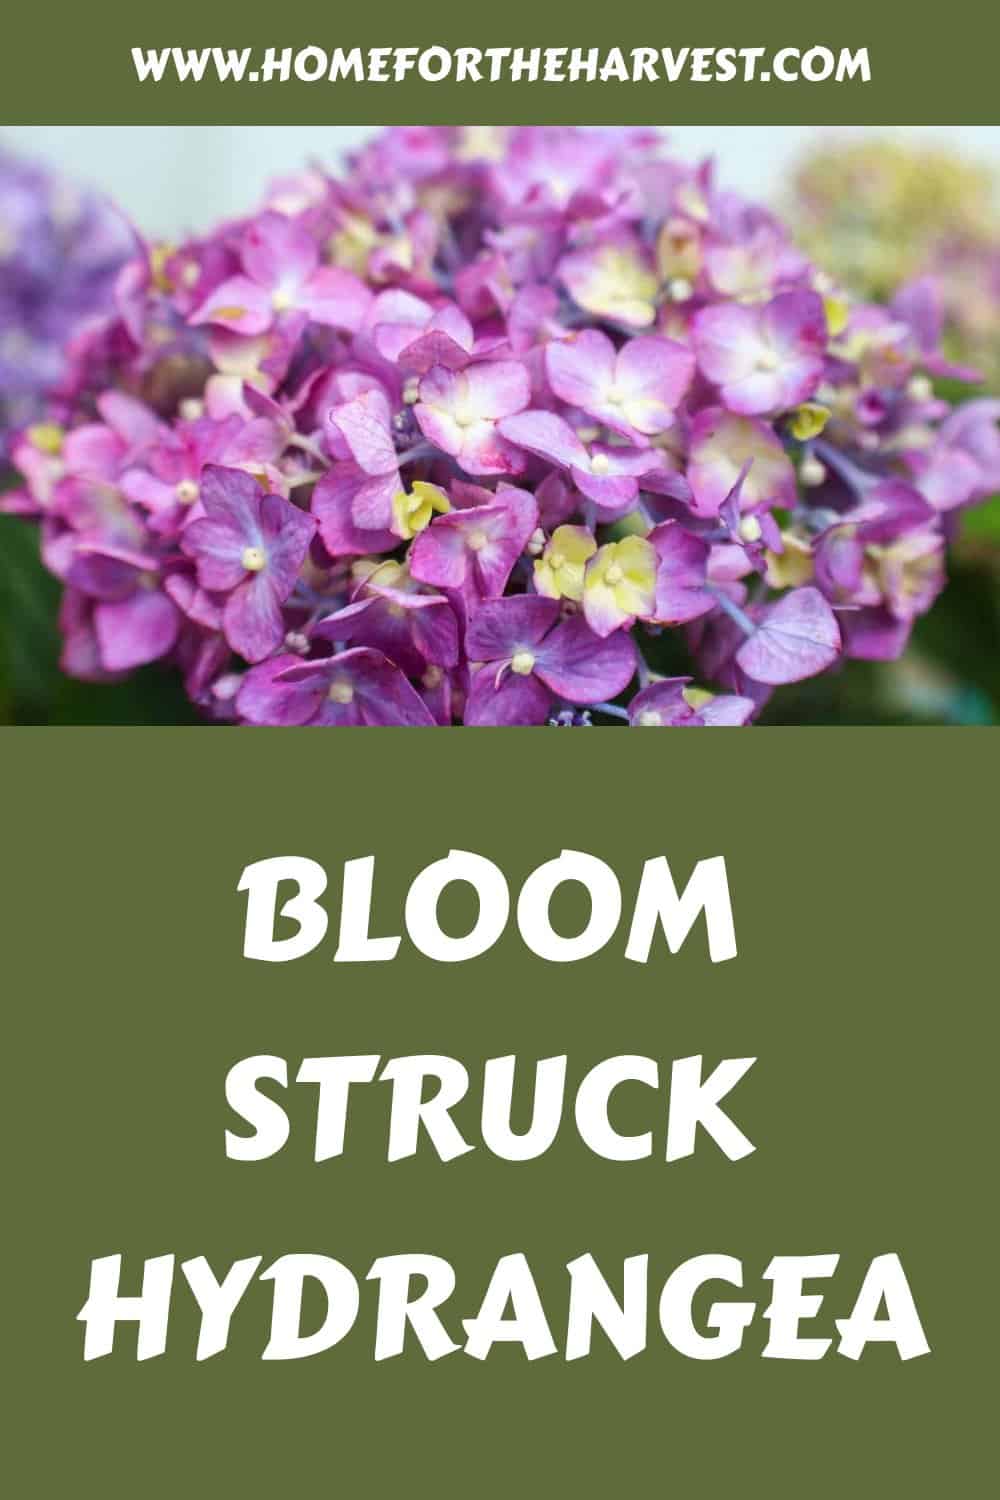 Bloom struck hydrangea generated pin 23771